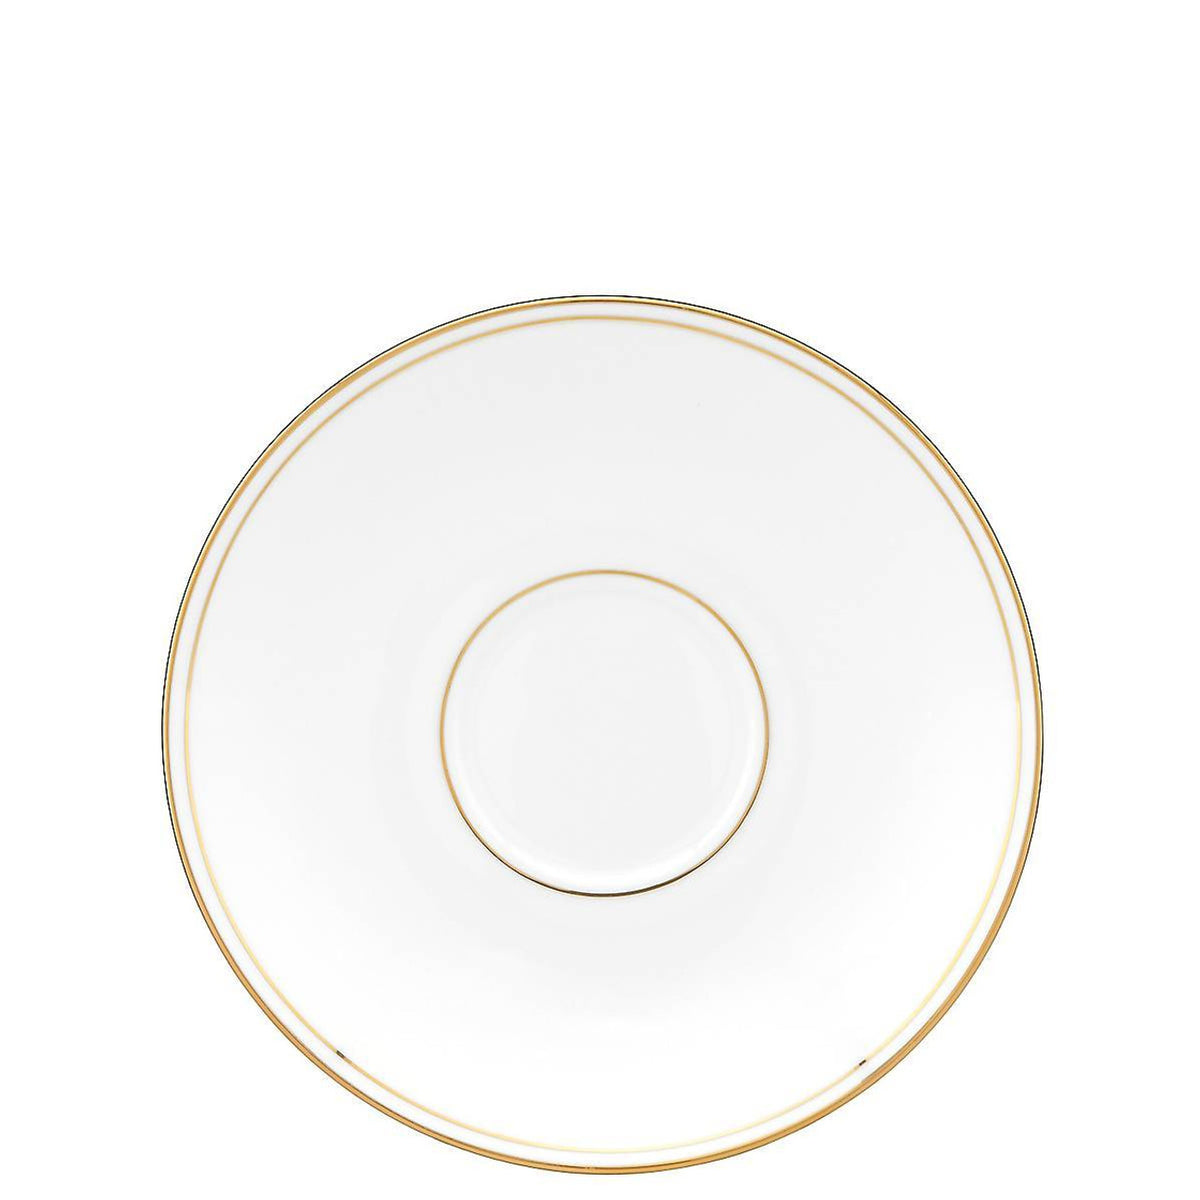 Lenox Federal Dinnerware - Gold Rim, Assorted Style Plates